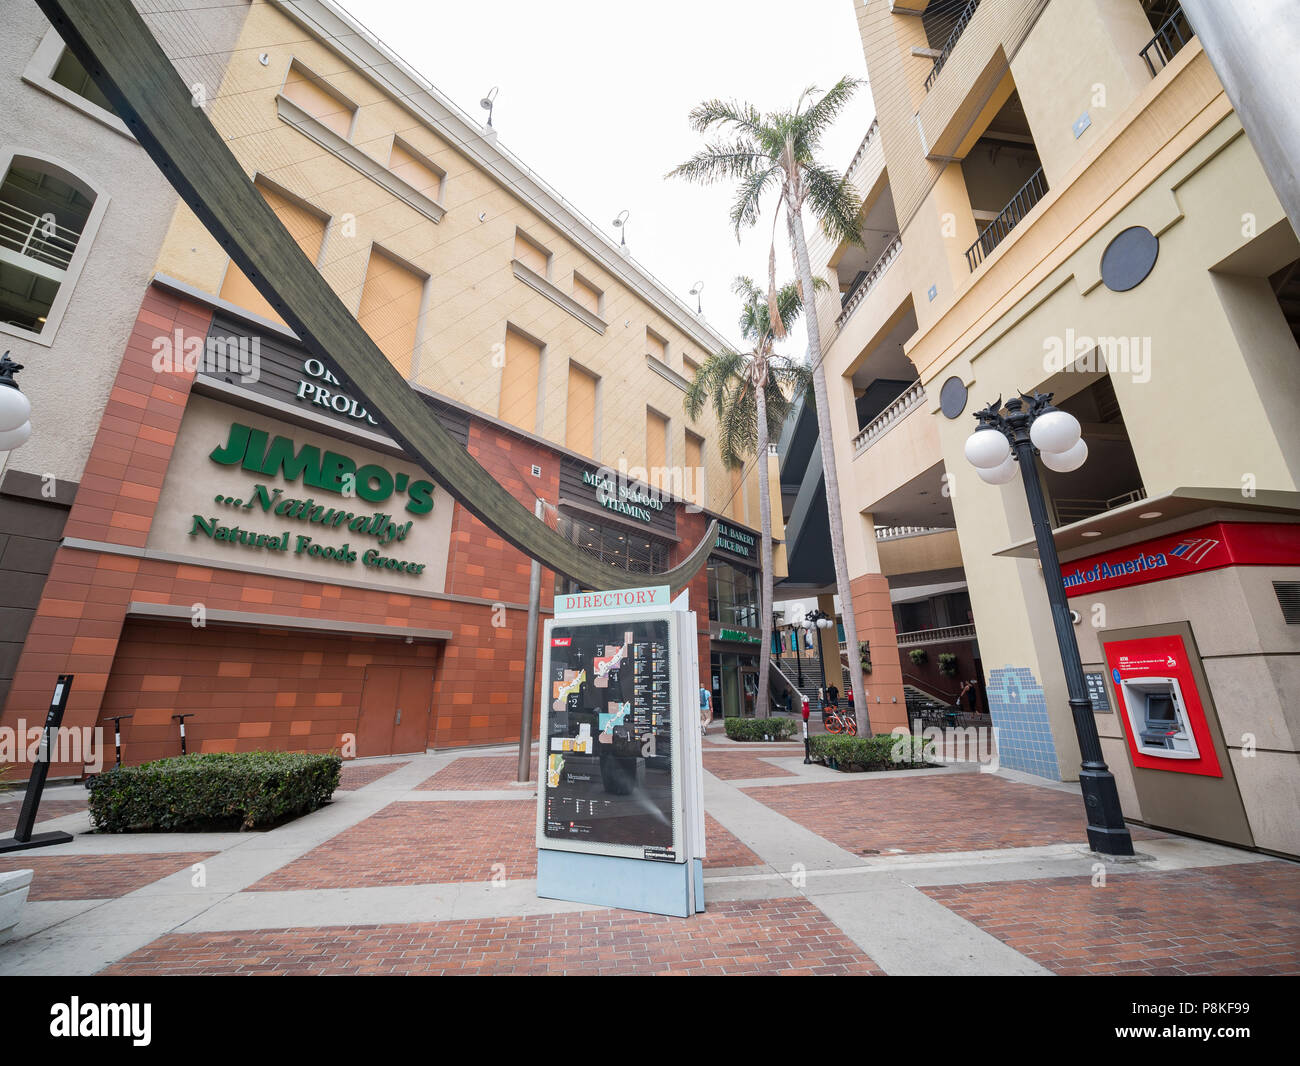 San Diego, JUN 29: The Horton Plaza Mall on JUN 29, 2018 at San Diego, California Stock Photo